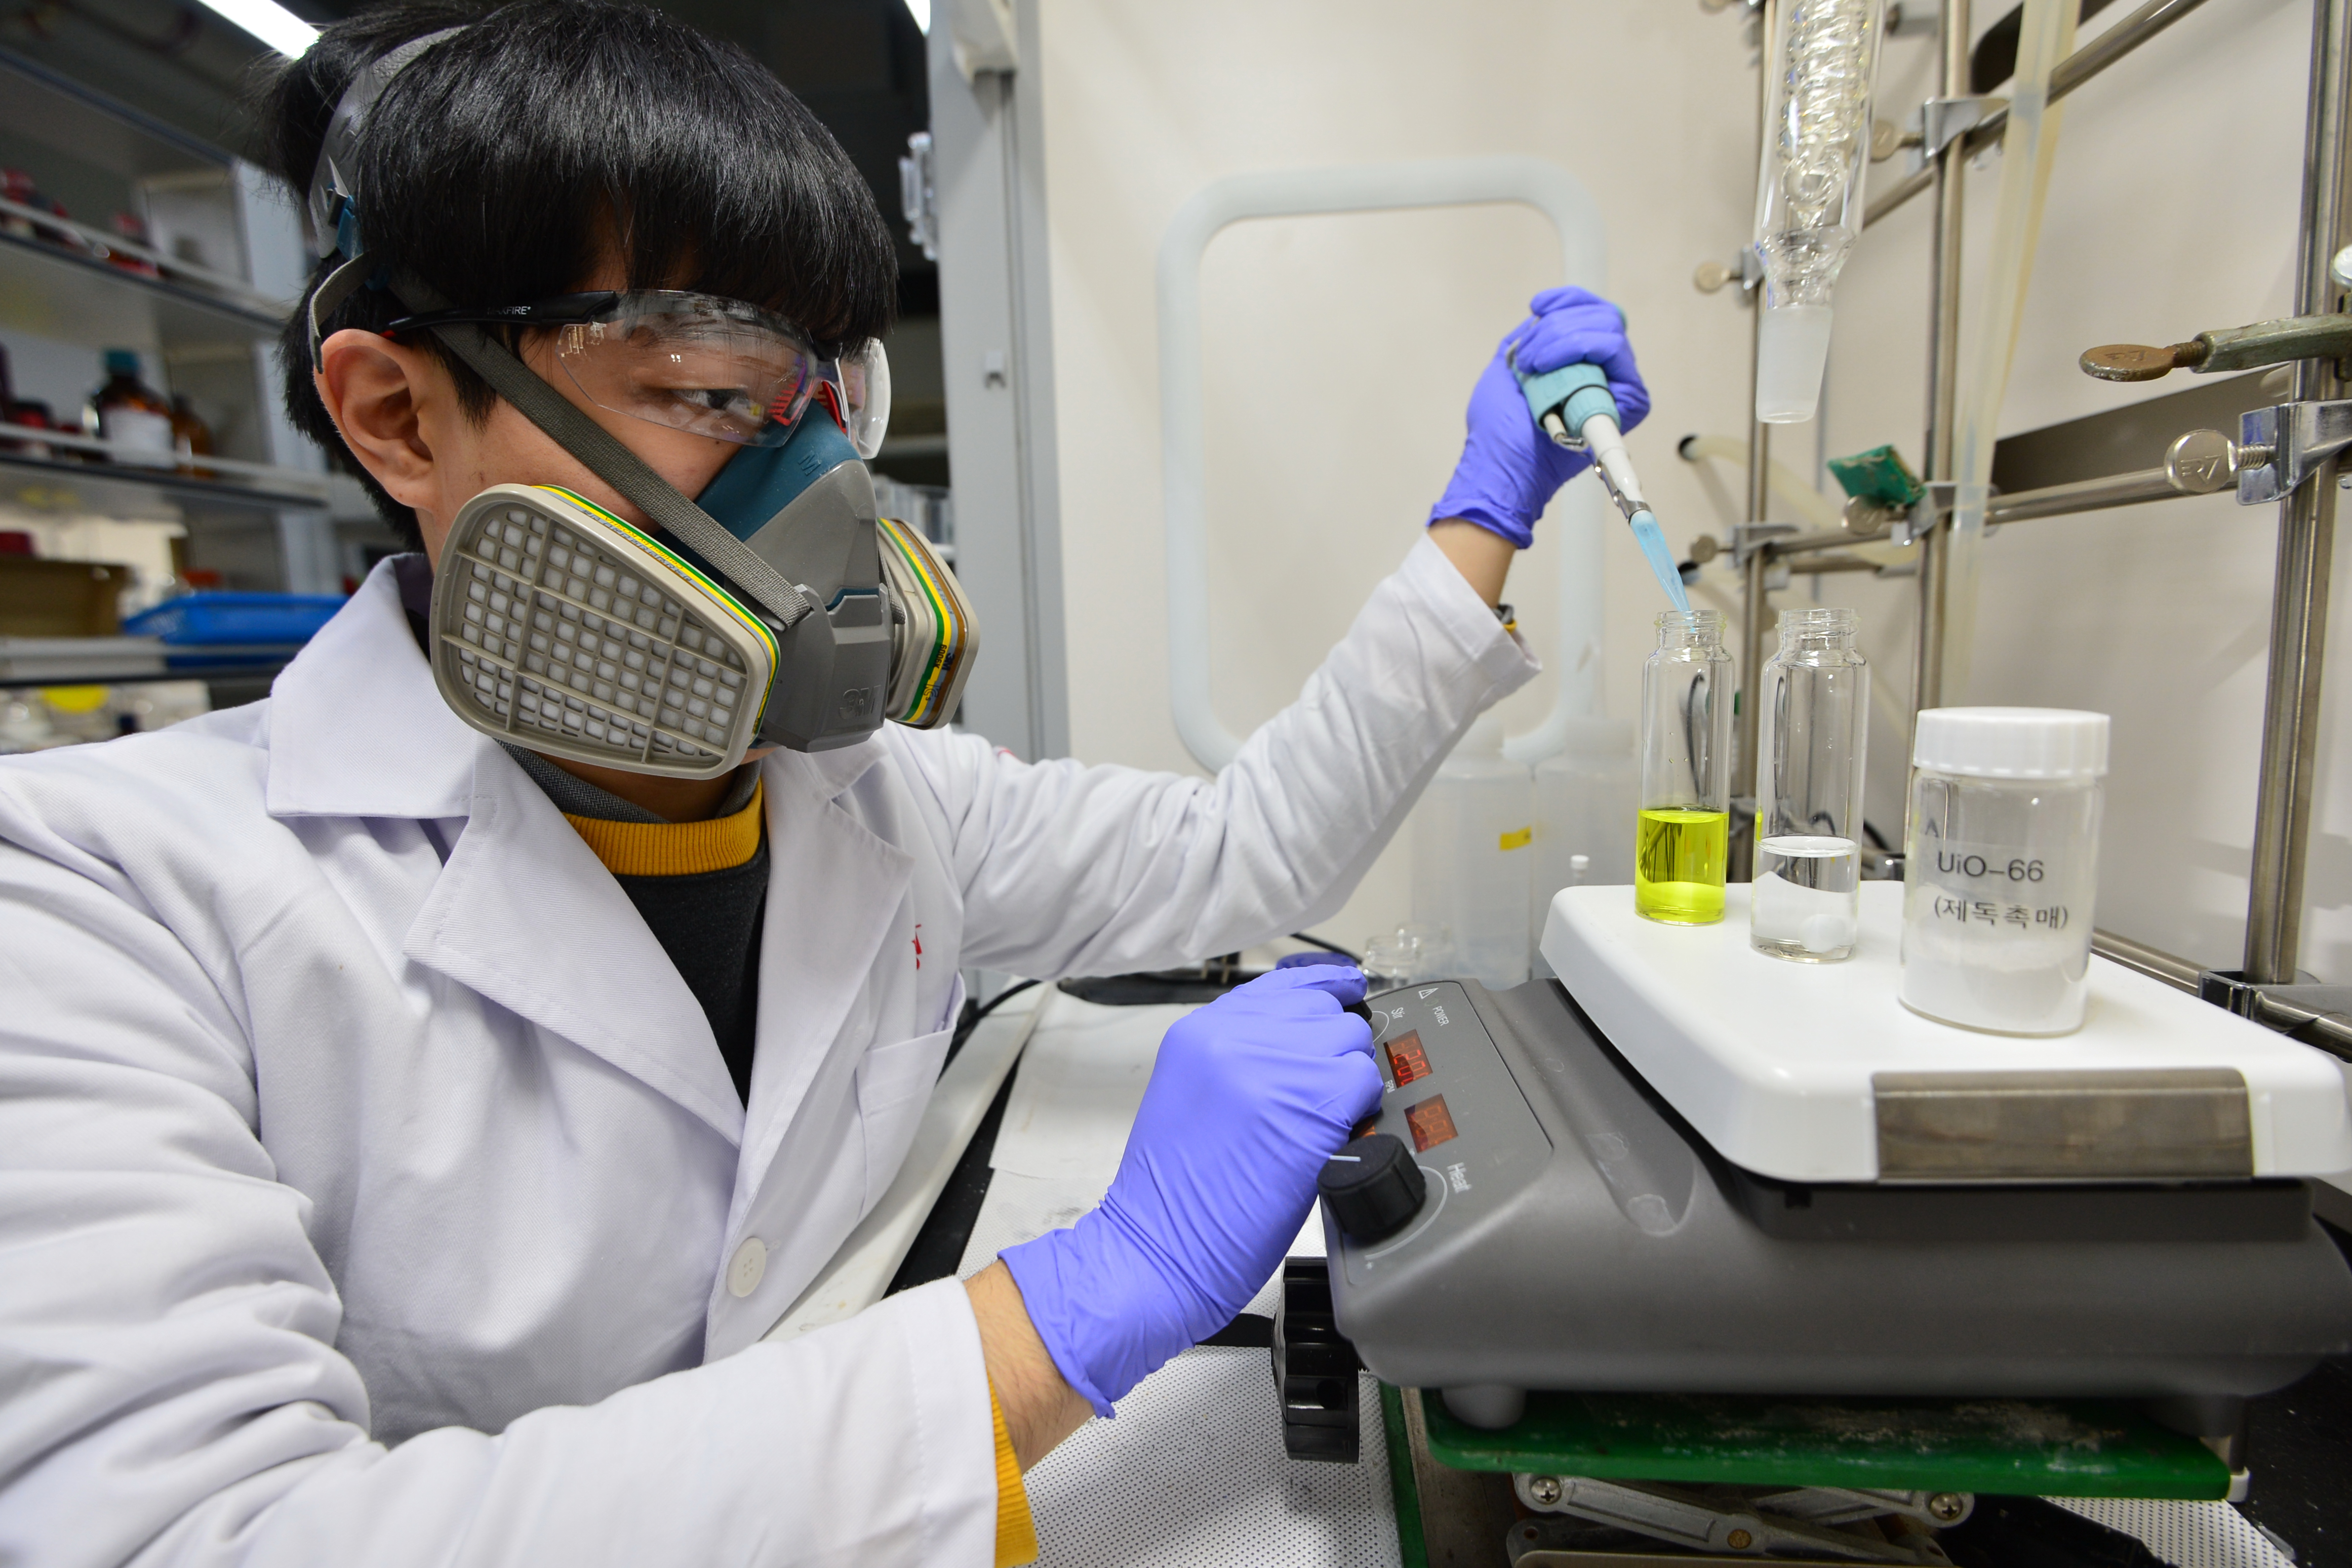 KIST 연구진이 개발한 고활성의 제독촉매로 독성 화학물질을 제거하는 실험을 하고 있다. KIST 제공